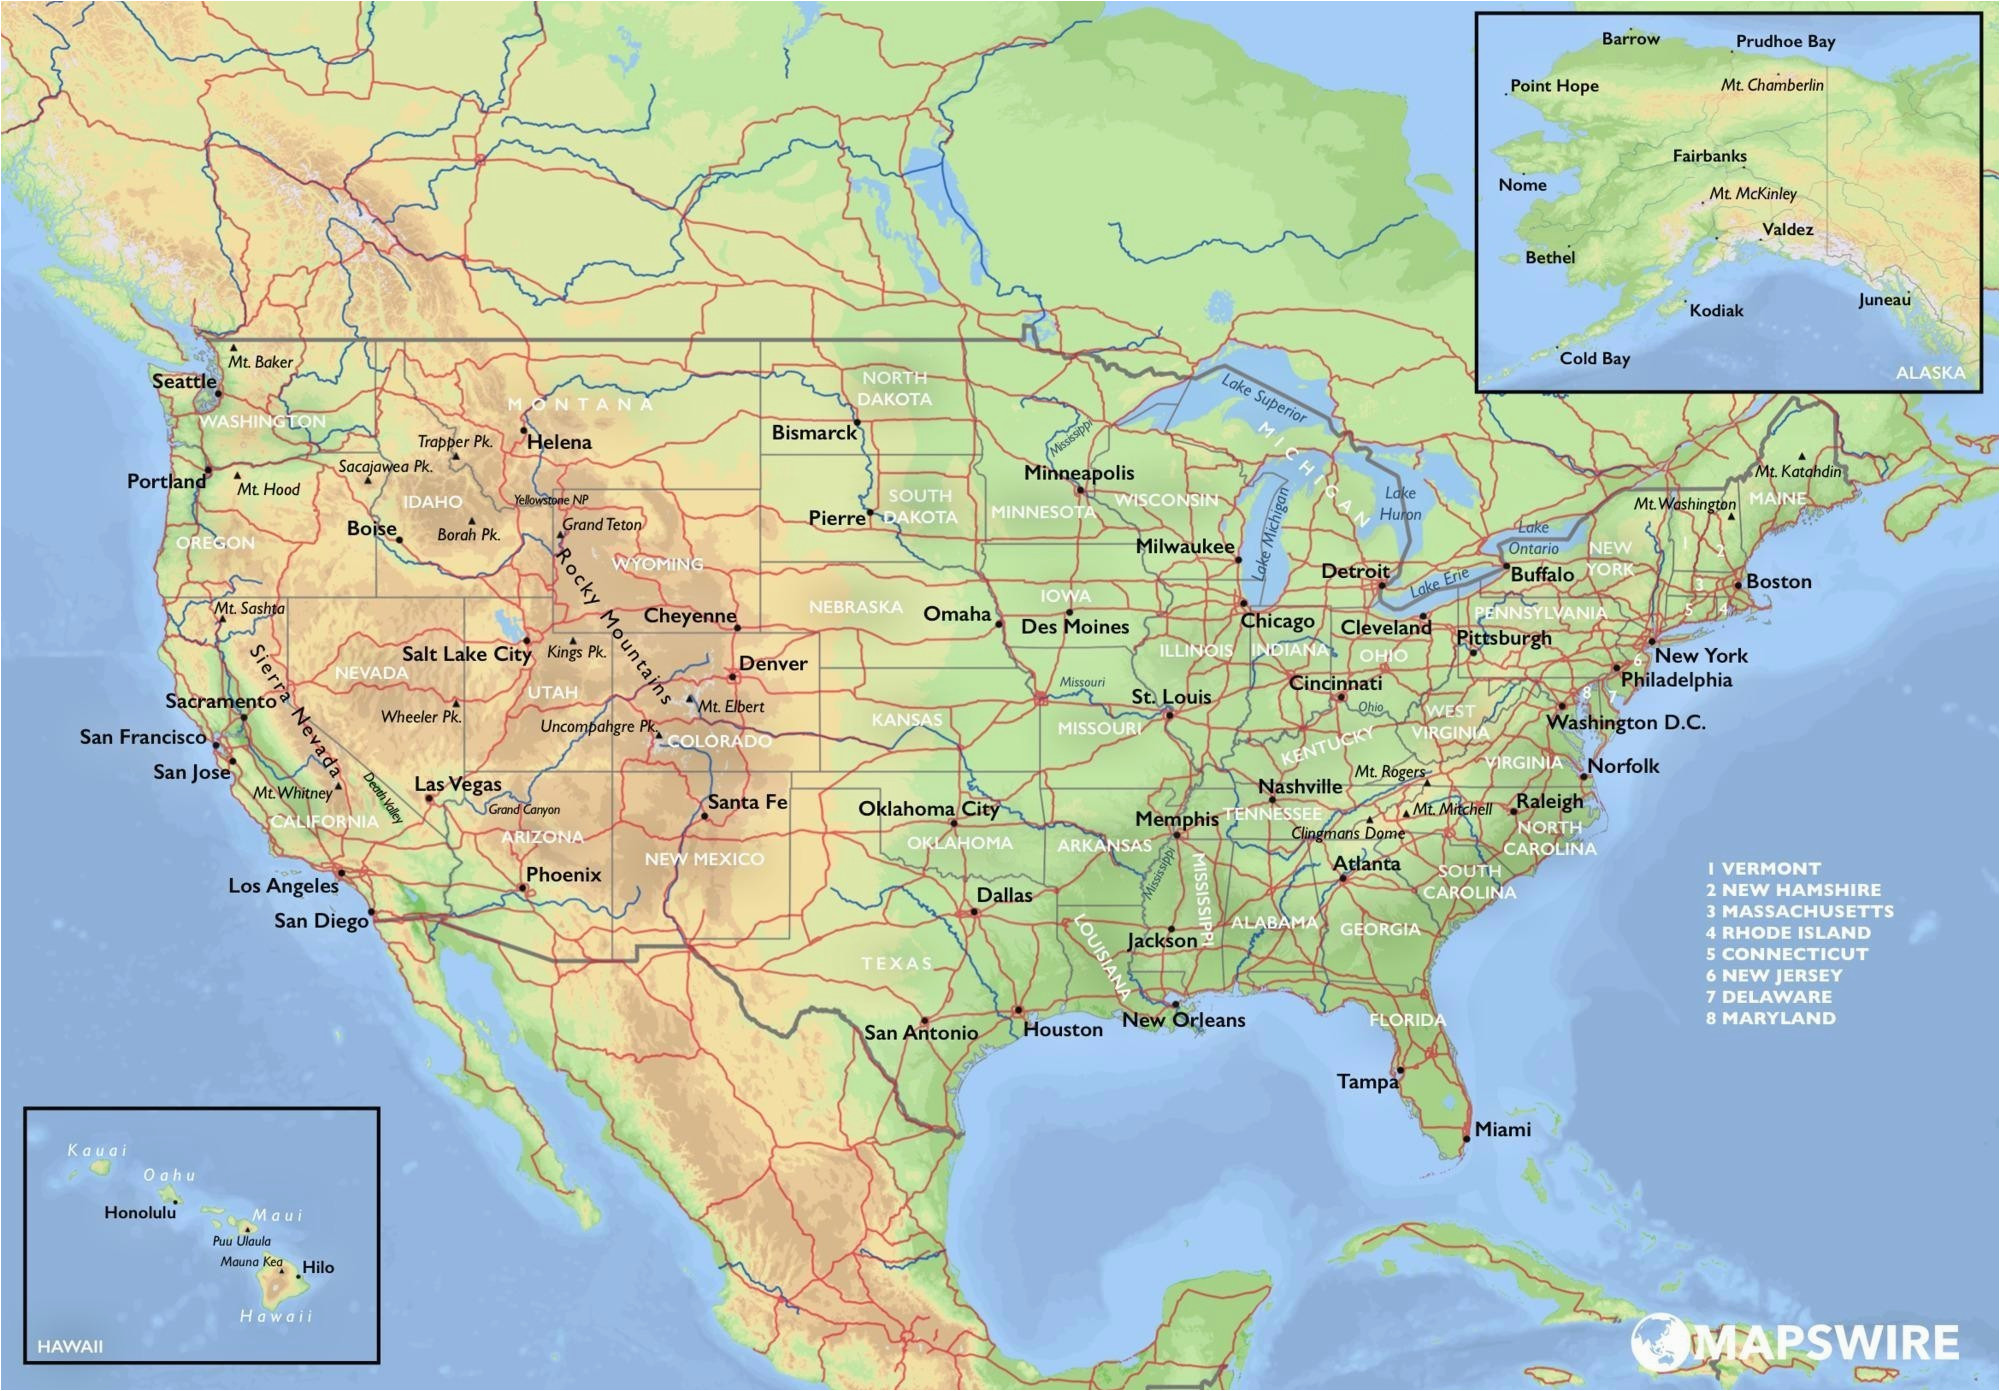 Topographic Map Of Arizona topographical Map Of Arizona Best Of topographic Maps United States